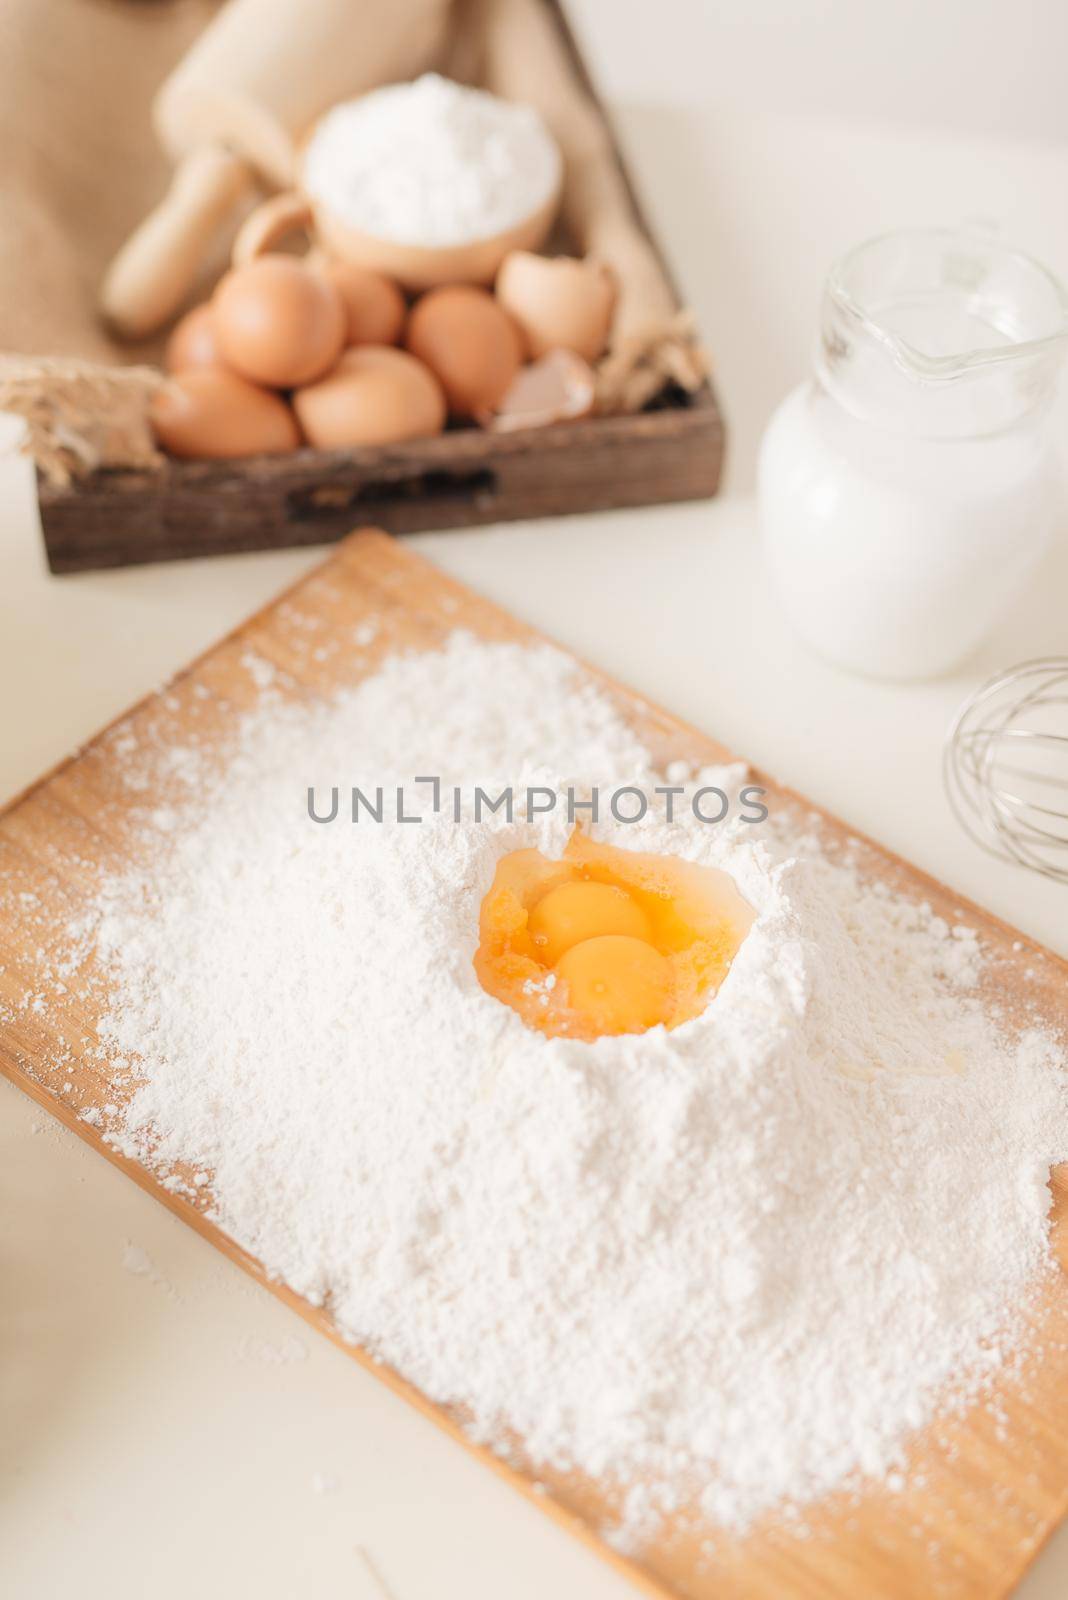 Baking ingredient's preparation. - Image by makidotvn